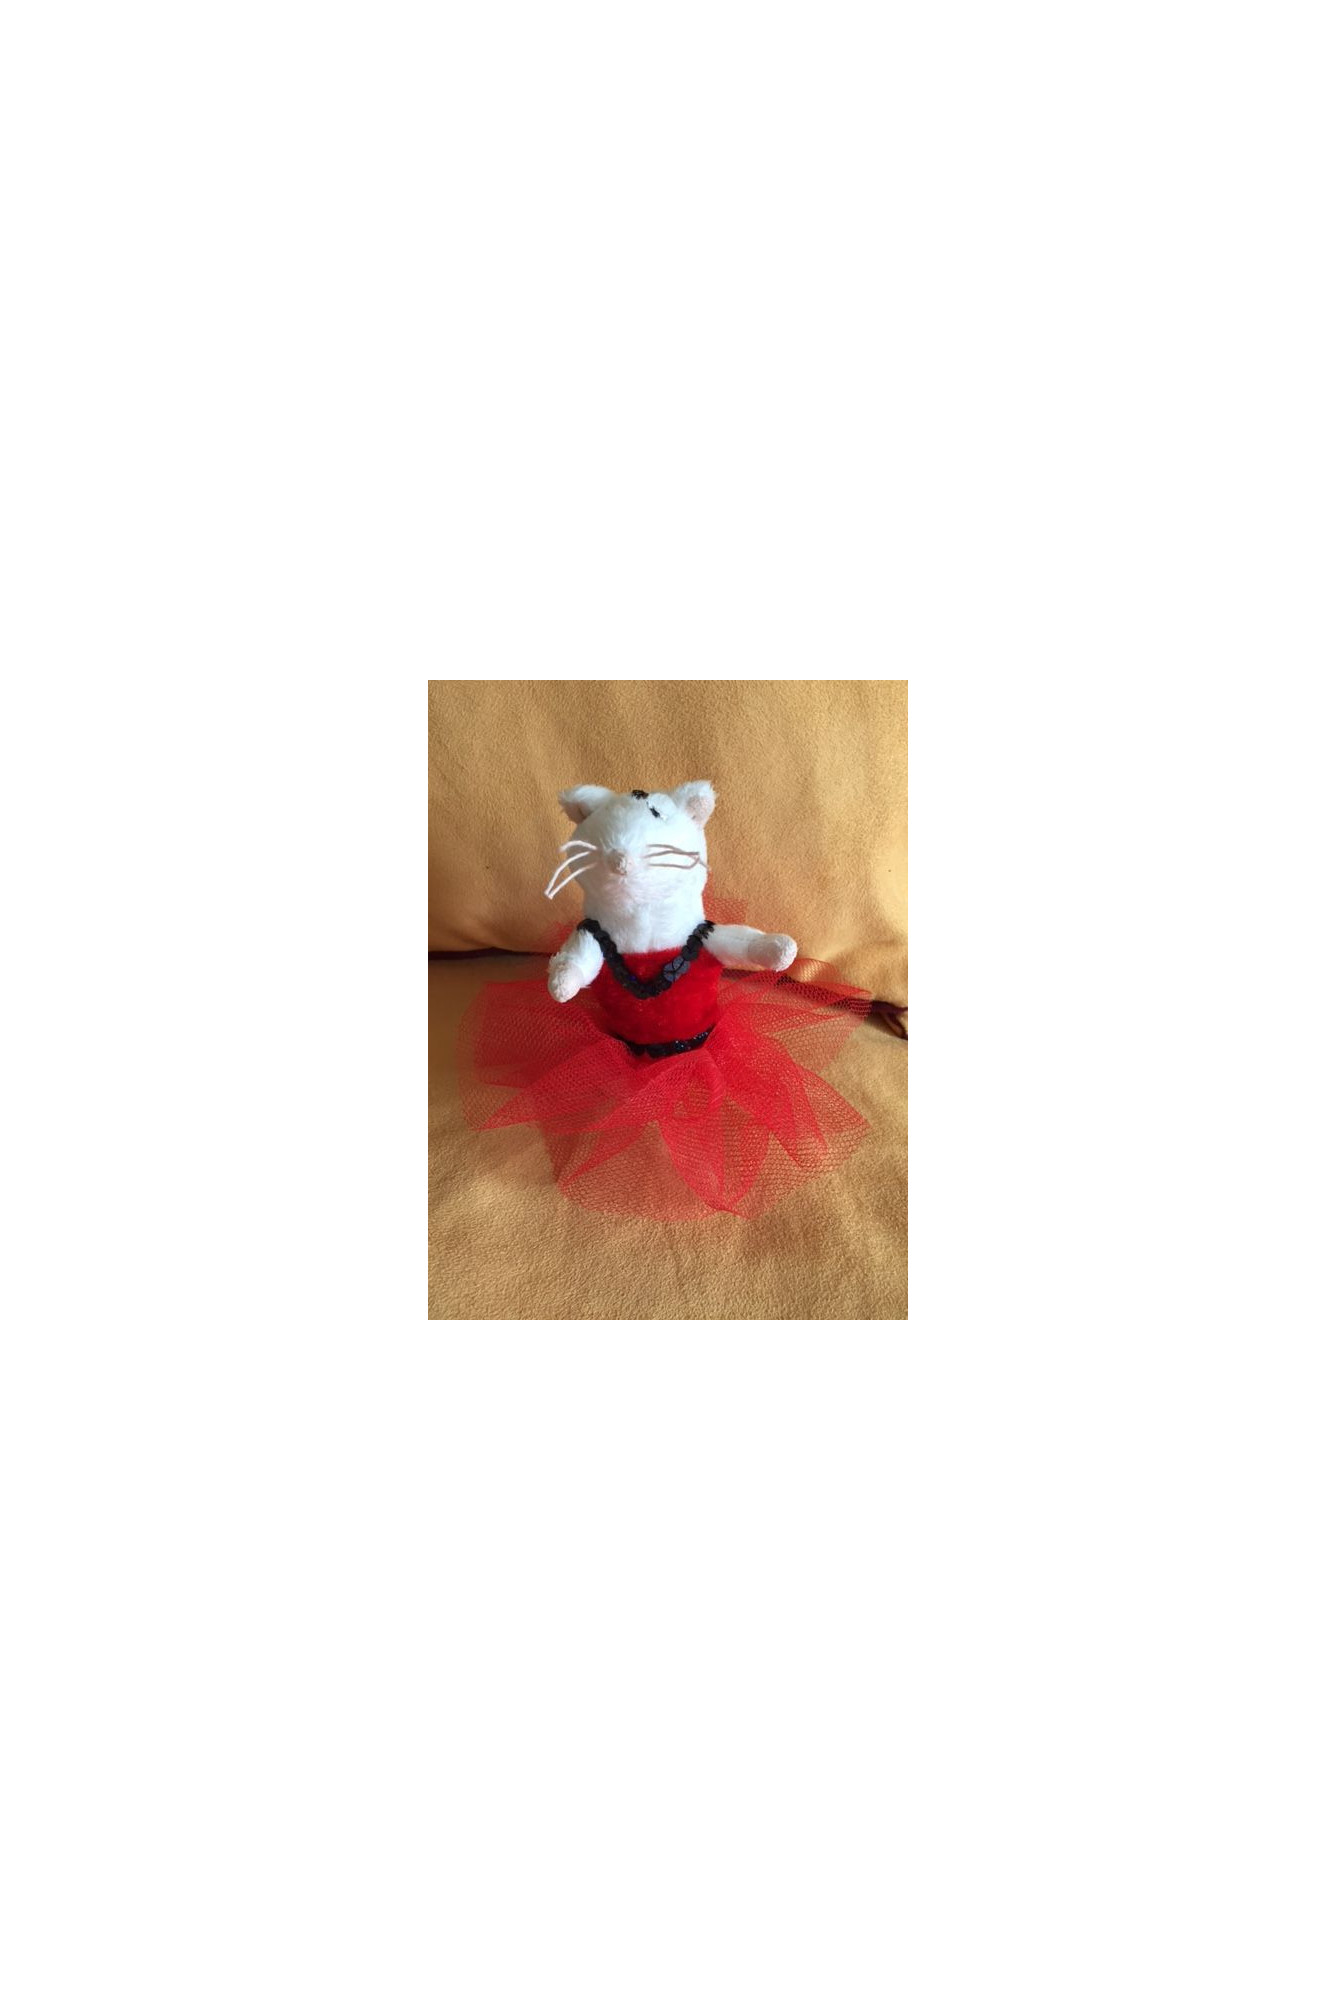 Petite souris en tutu rouge